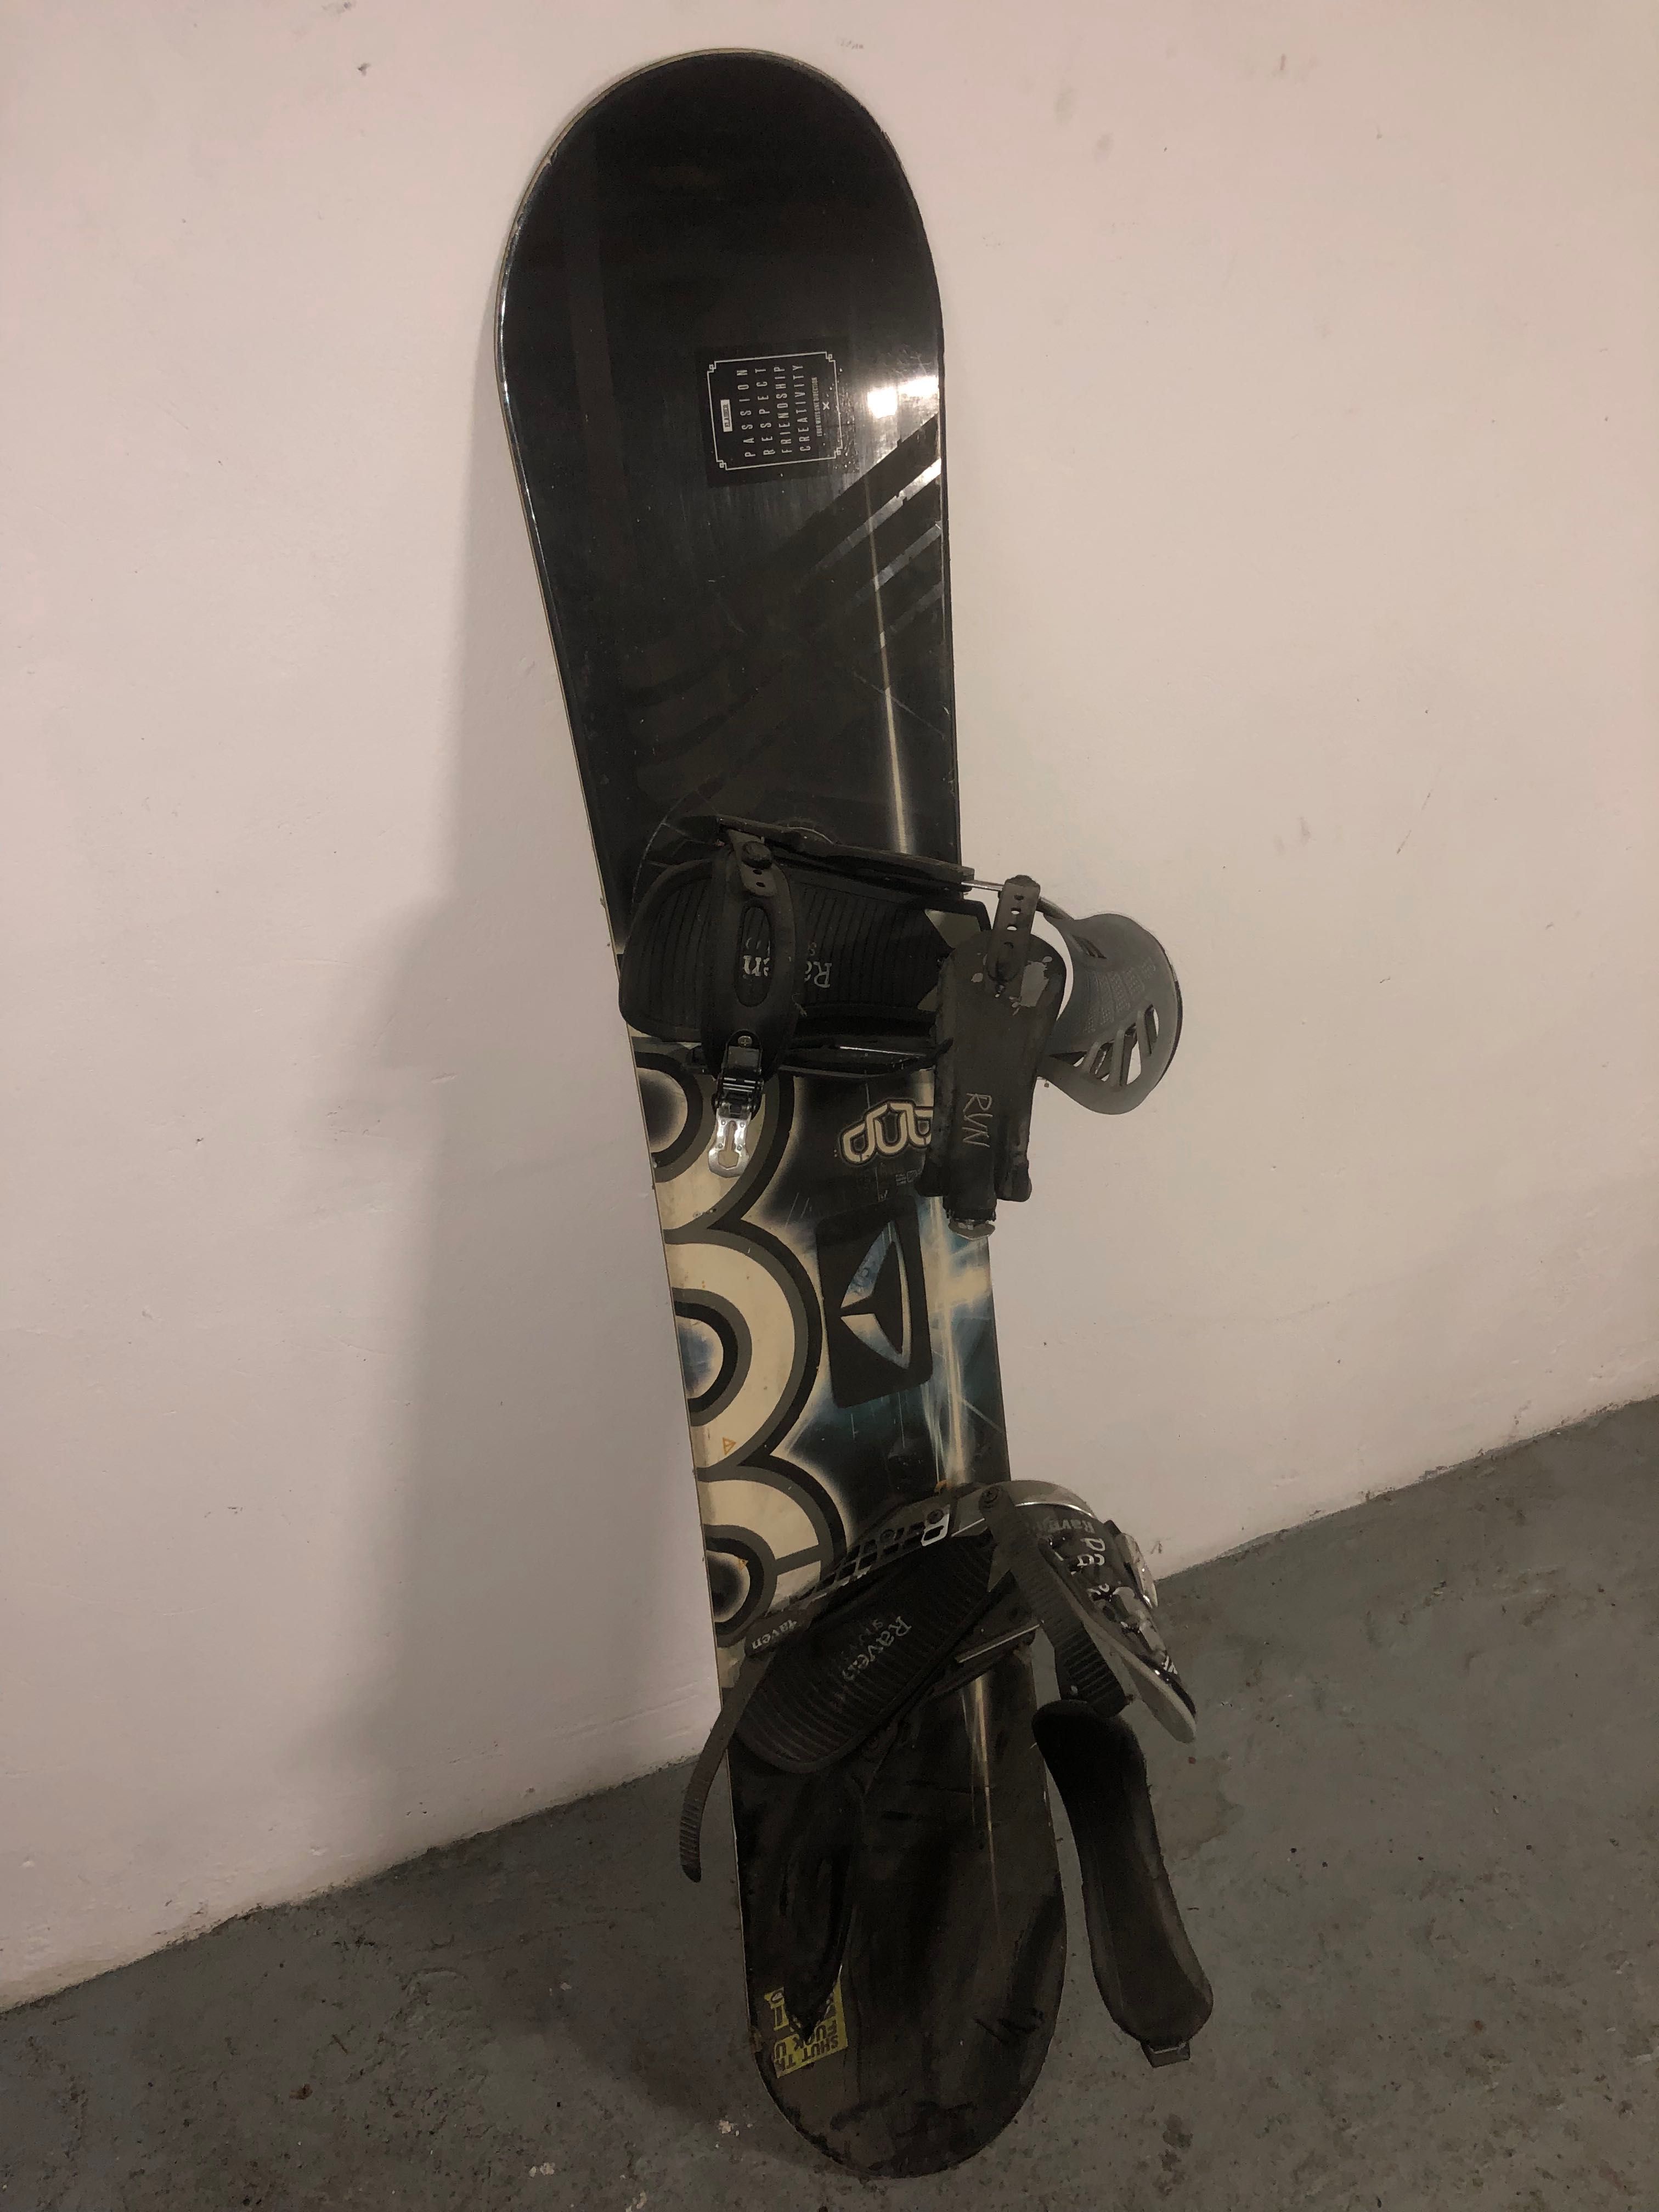 Deska snowboard Dub Metrus 158 cm + wiązania Raven!